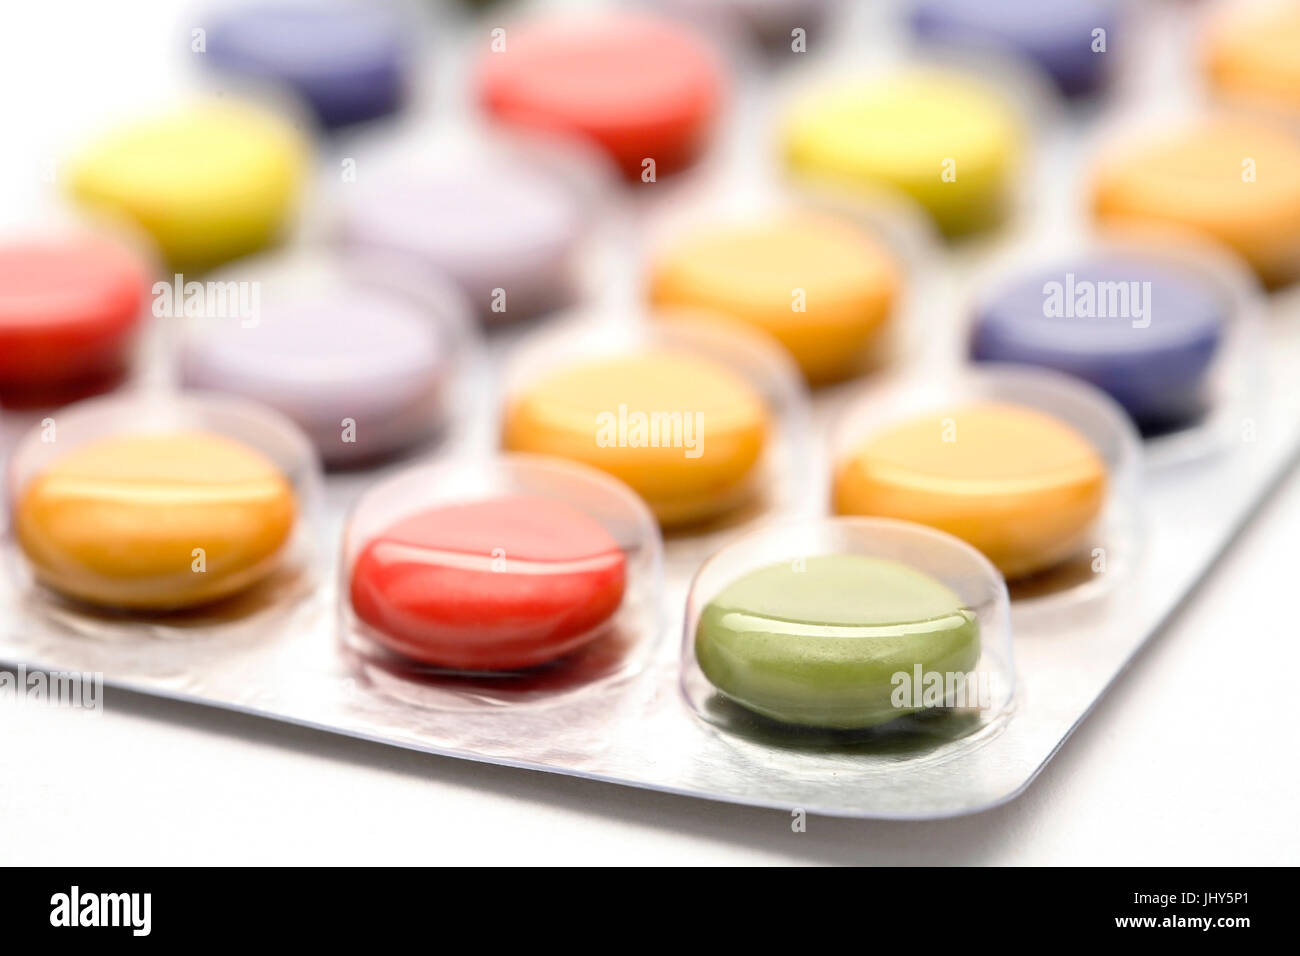 Coloured tablets, Bunte Tabletten Stock Photo